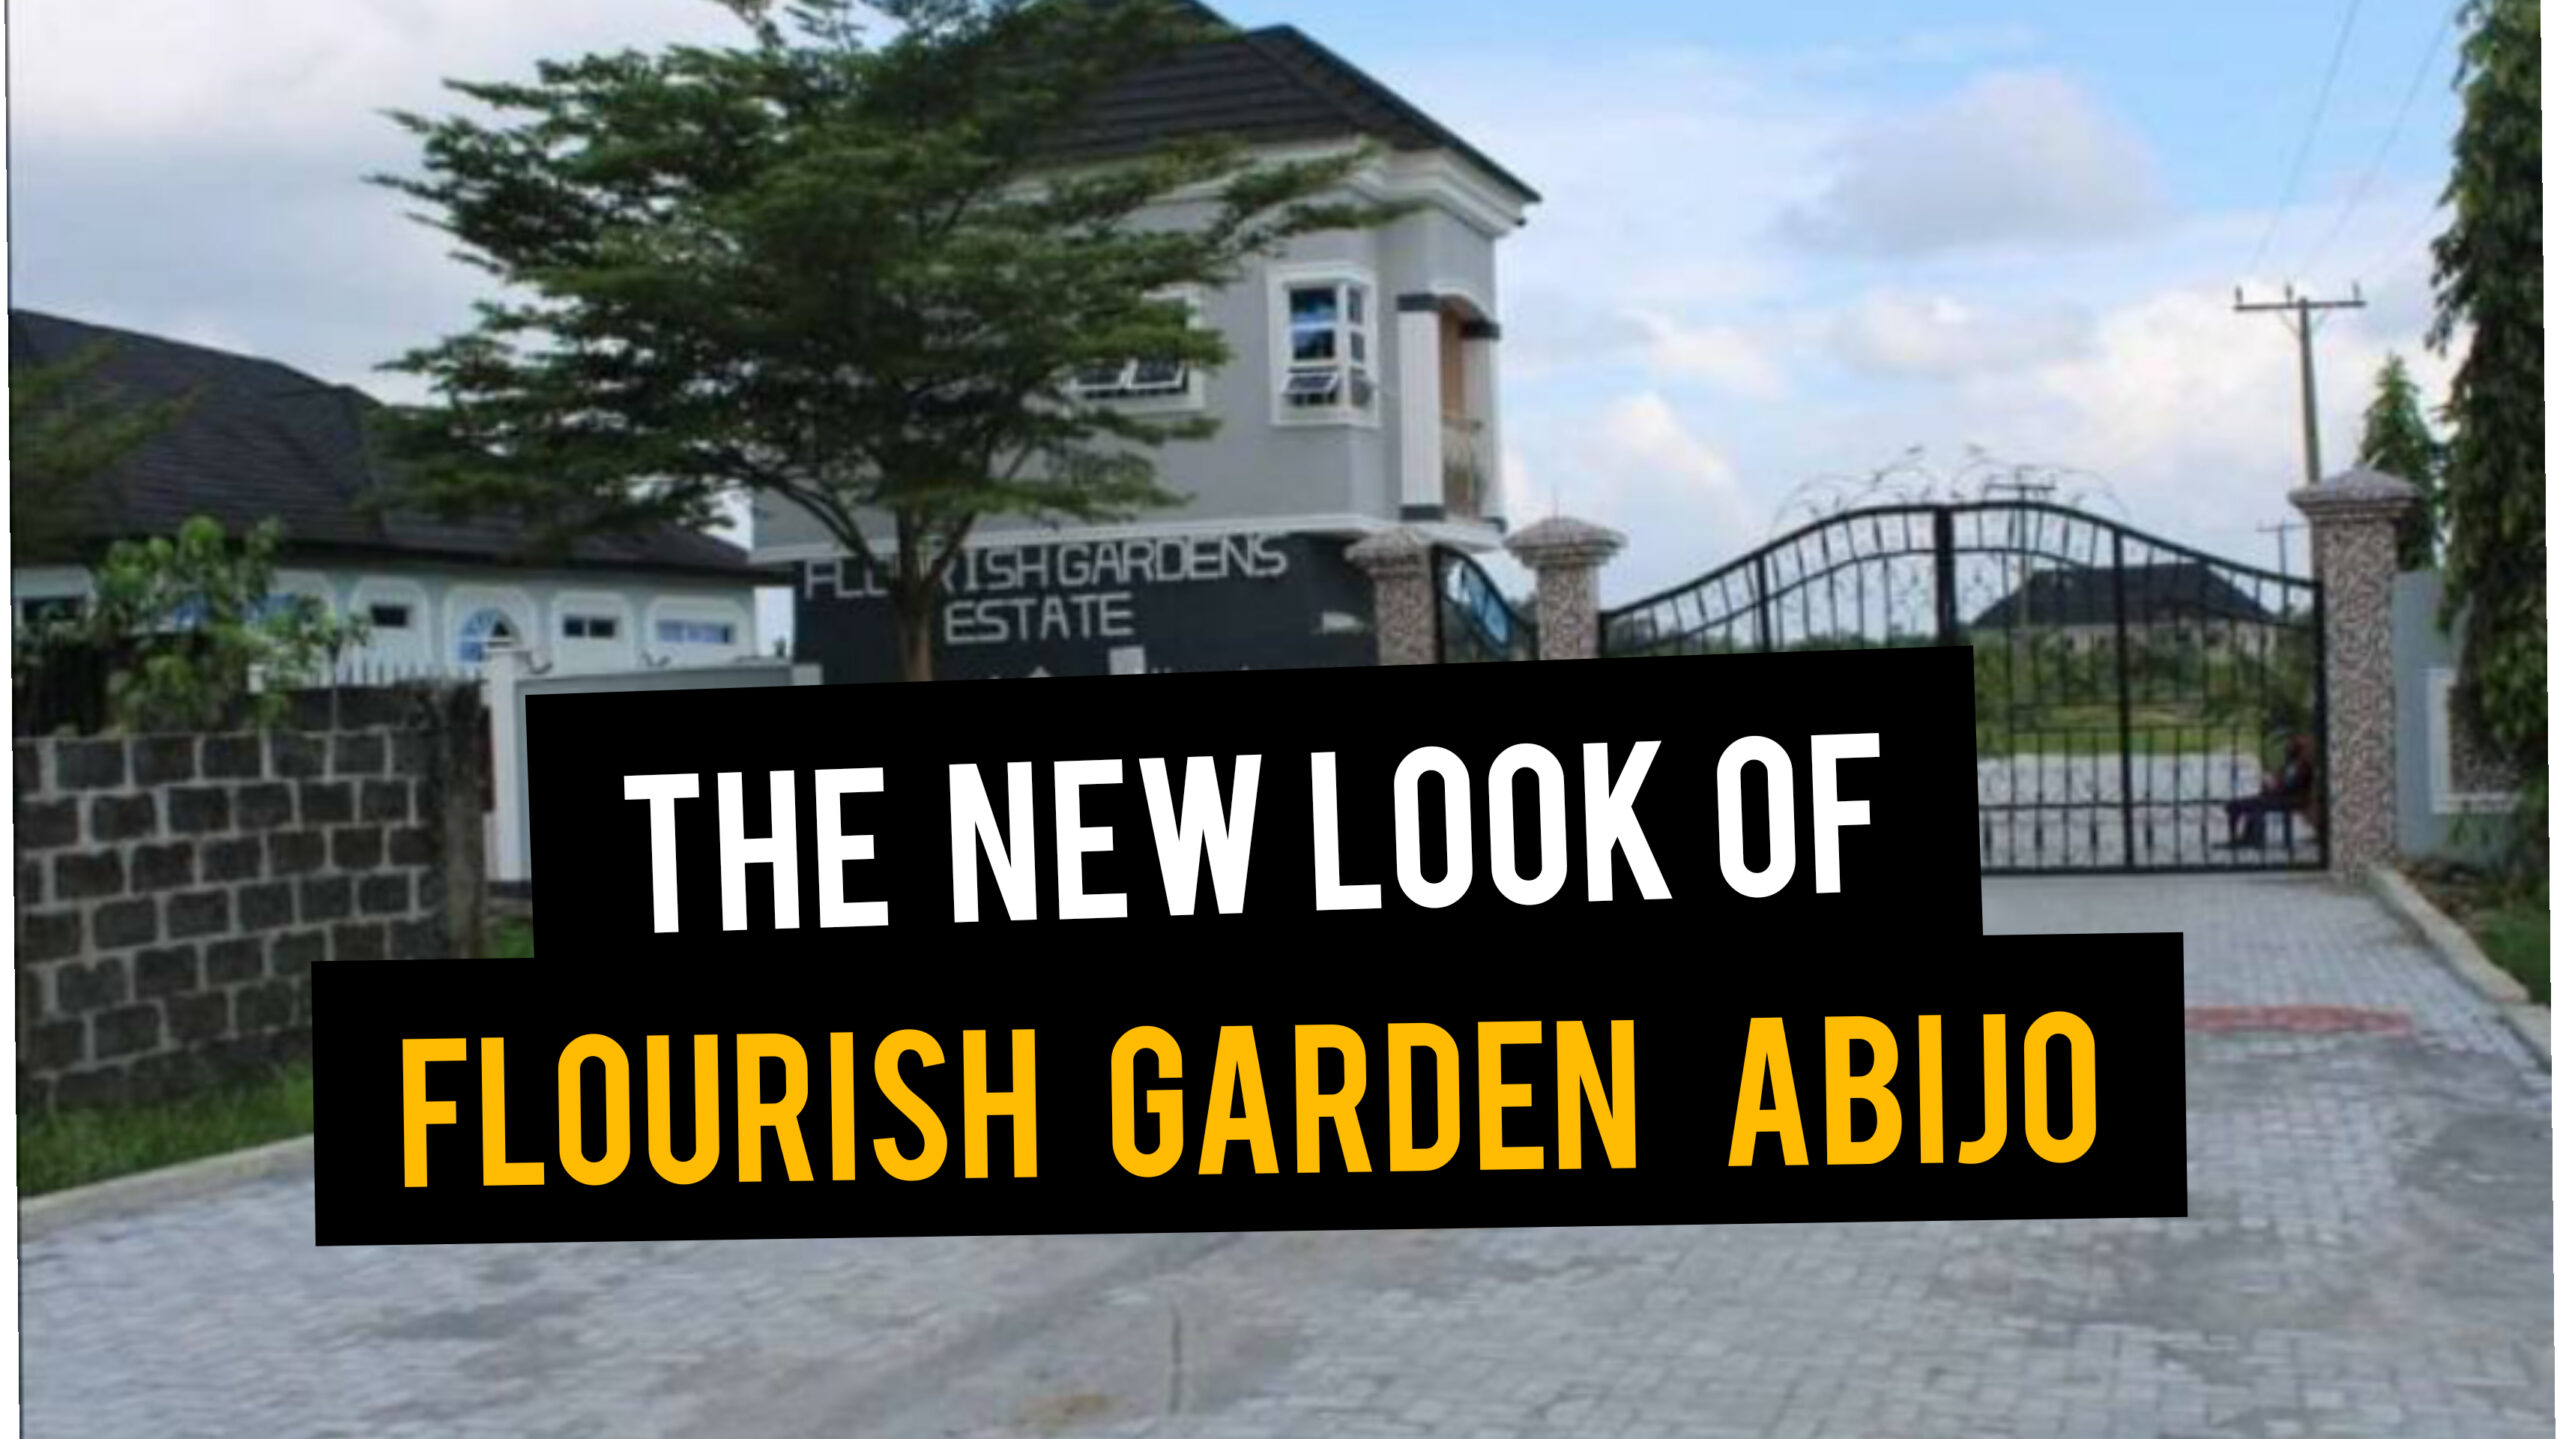 Flourish garden estate